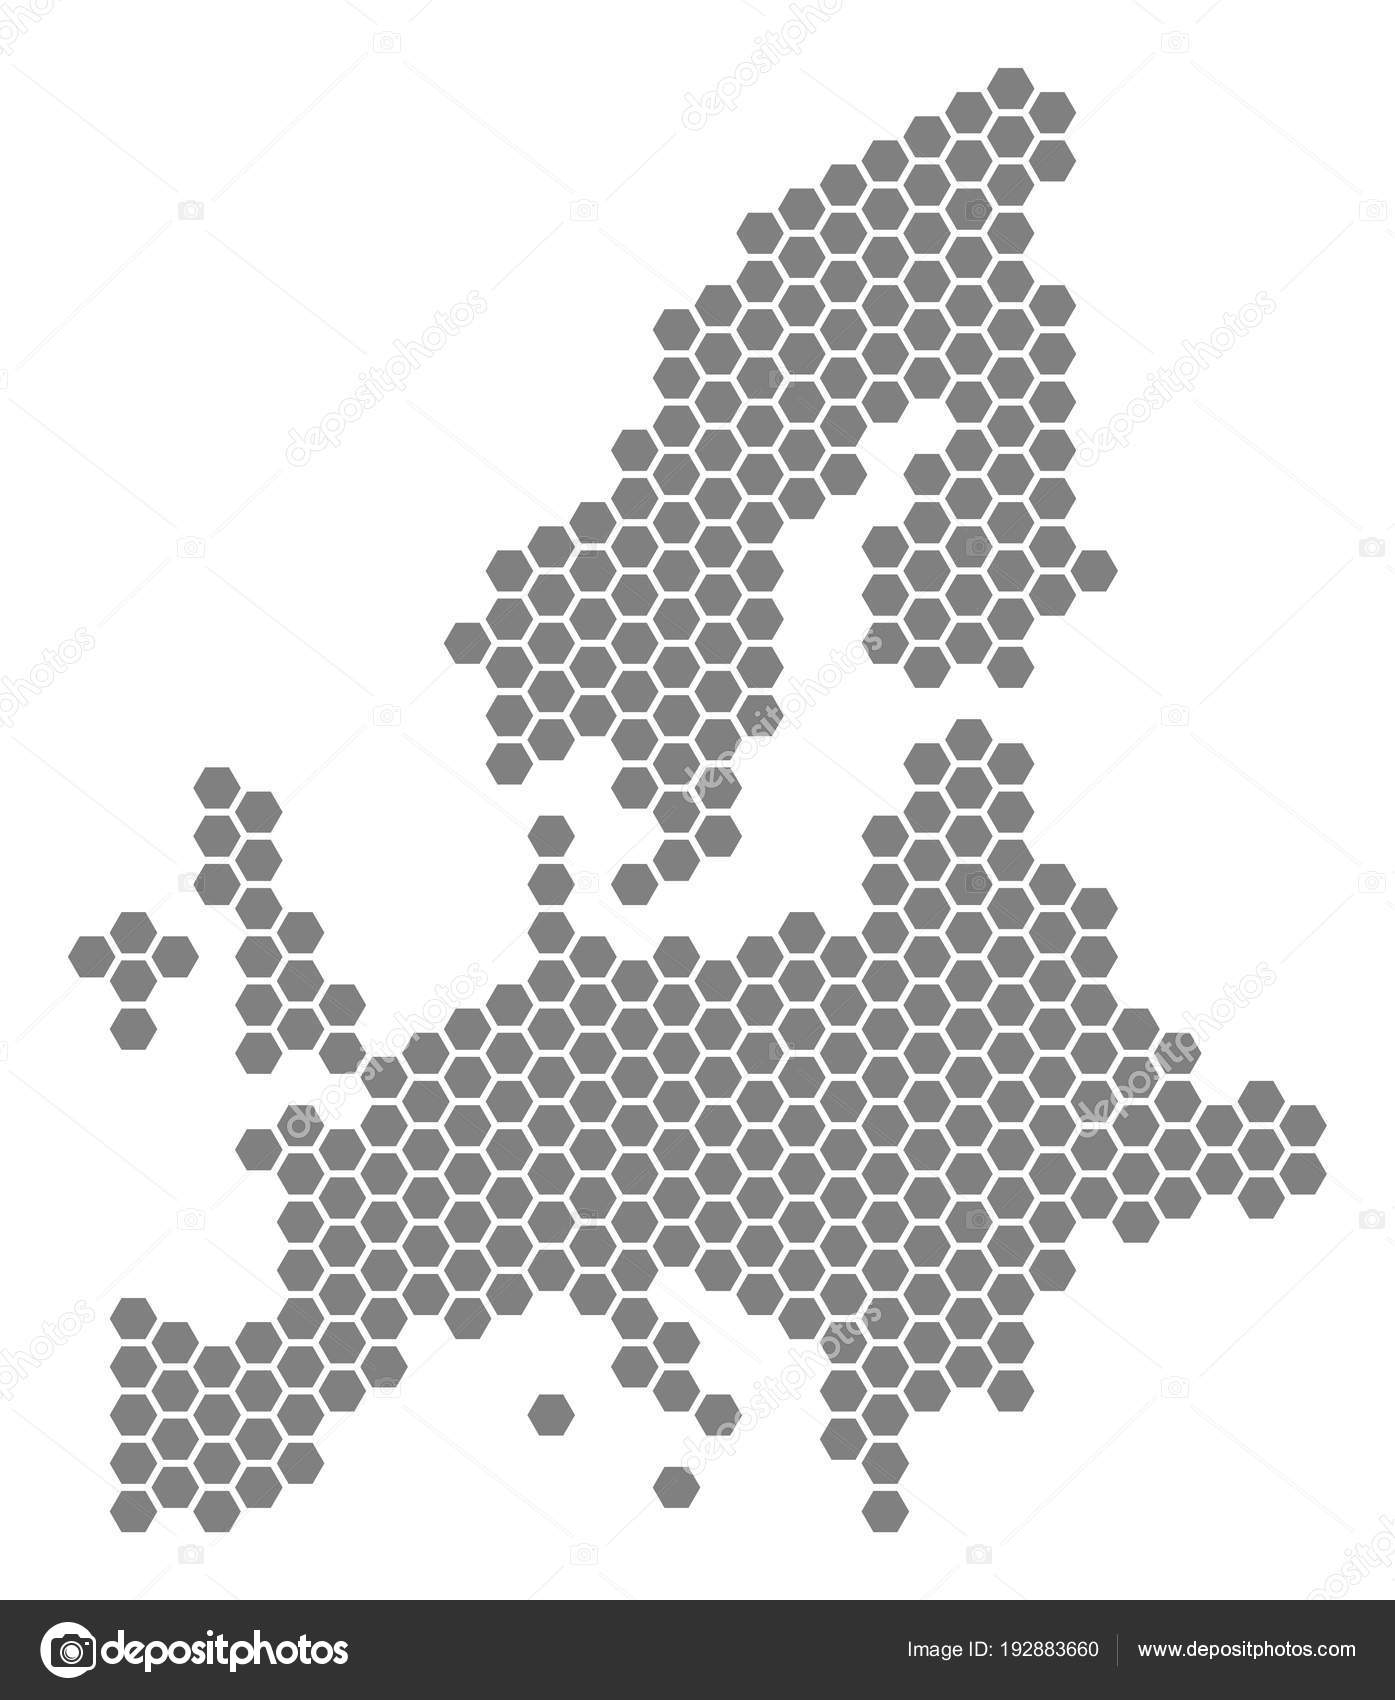 Carte De Lunion Européenne Hexagone Gris Image